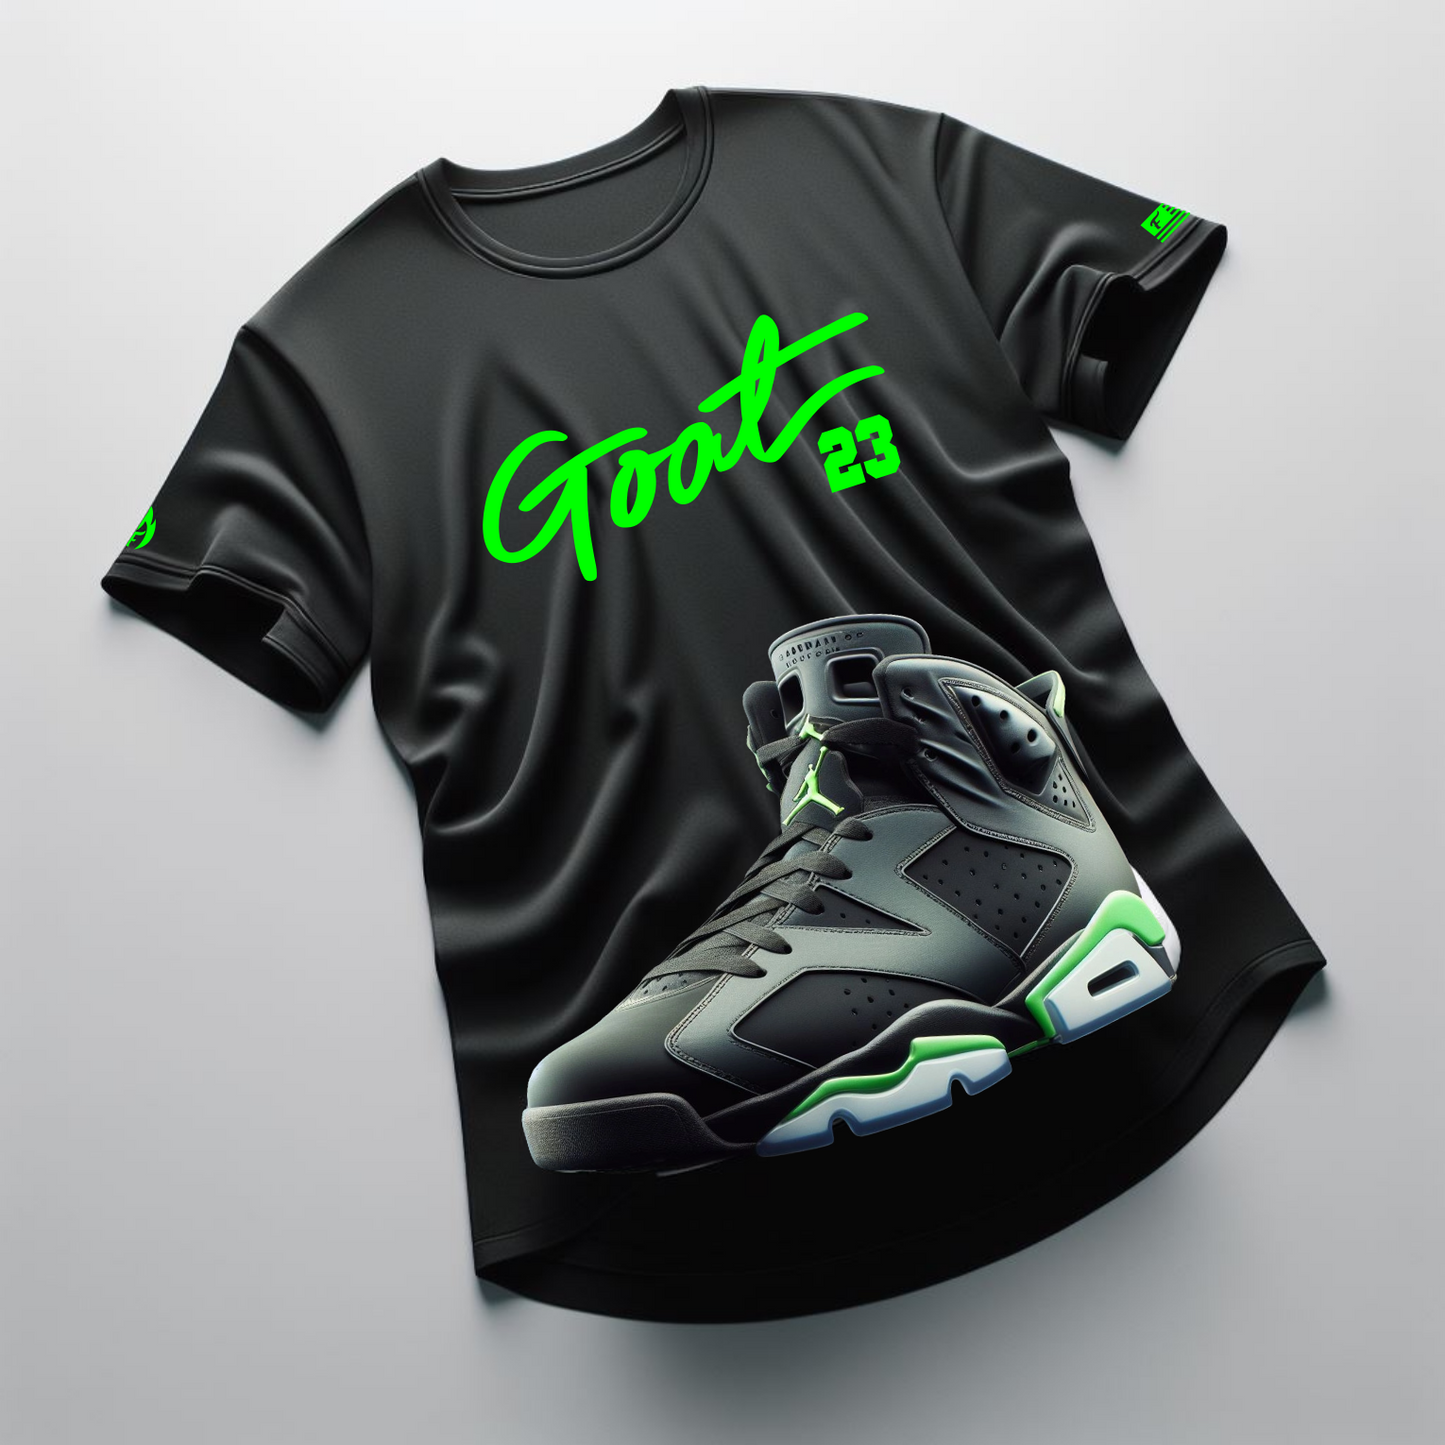 Men's GOAT #23 Black Sneaker T-Shirt To Match Air Jordan Retro 6 Electric Green  🔥 Men's Sneakerhead Tees